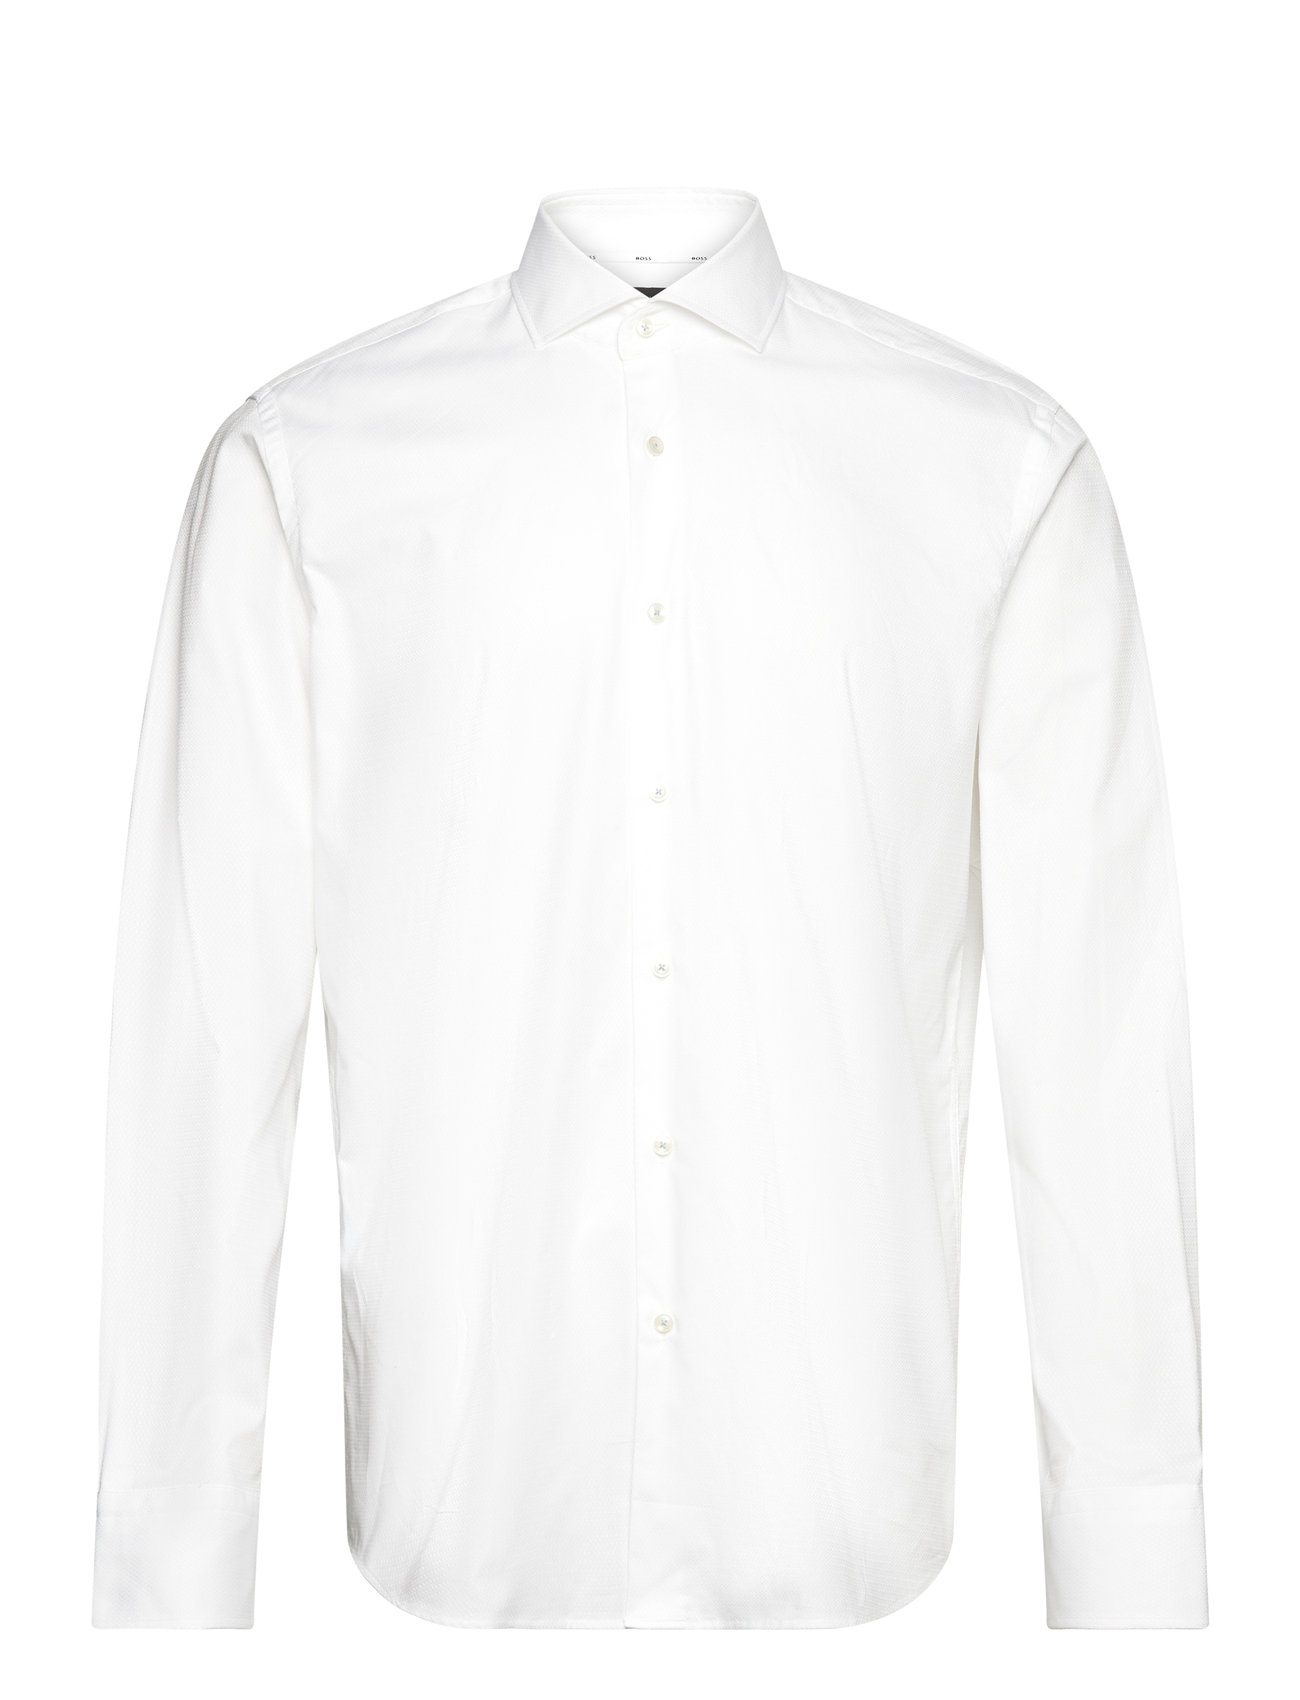 H-Joe-Spread-C1-222 Tops Shirts Tuxedo Shirts White BOSS